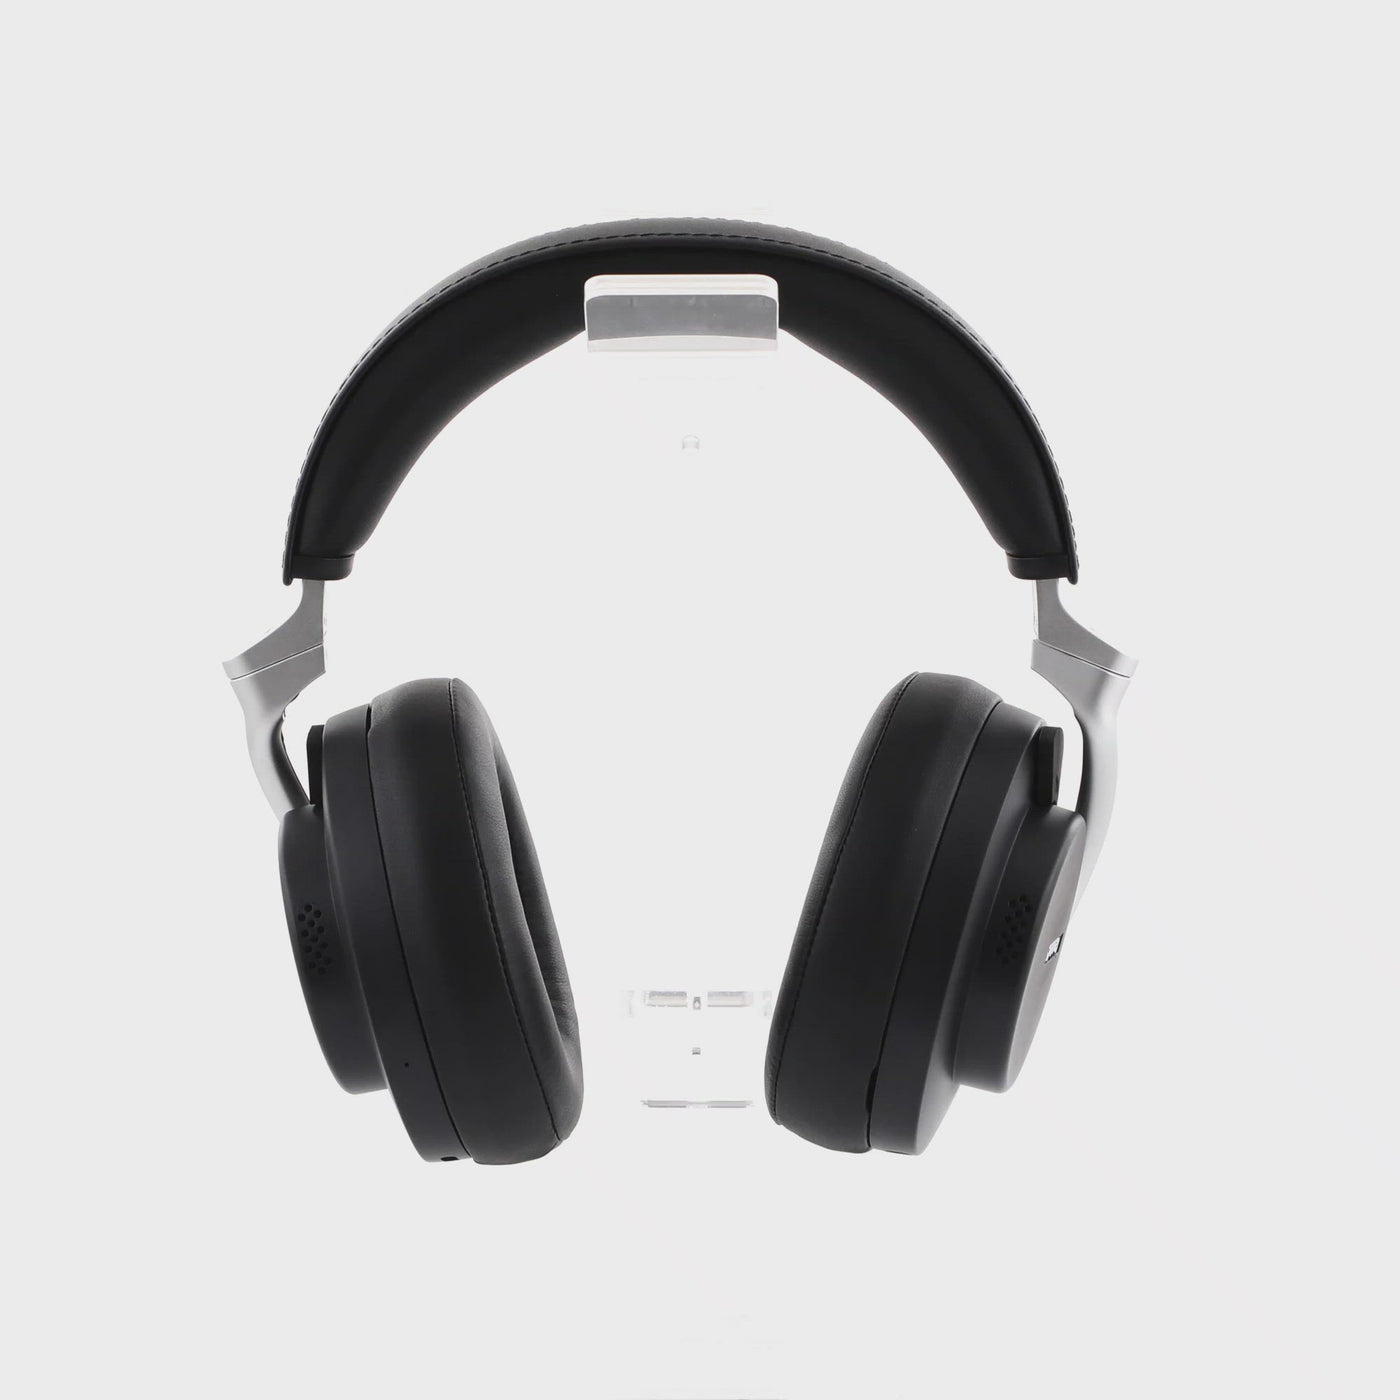 Shure AONIC 50 Premium Wireless Bluetooth Headphone (Black)